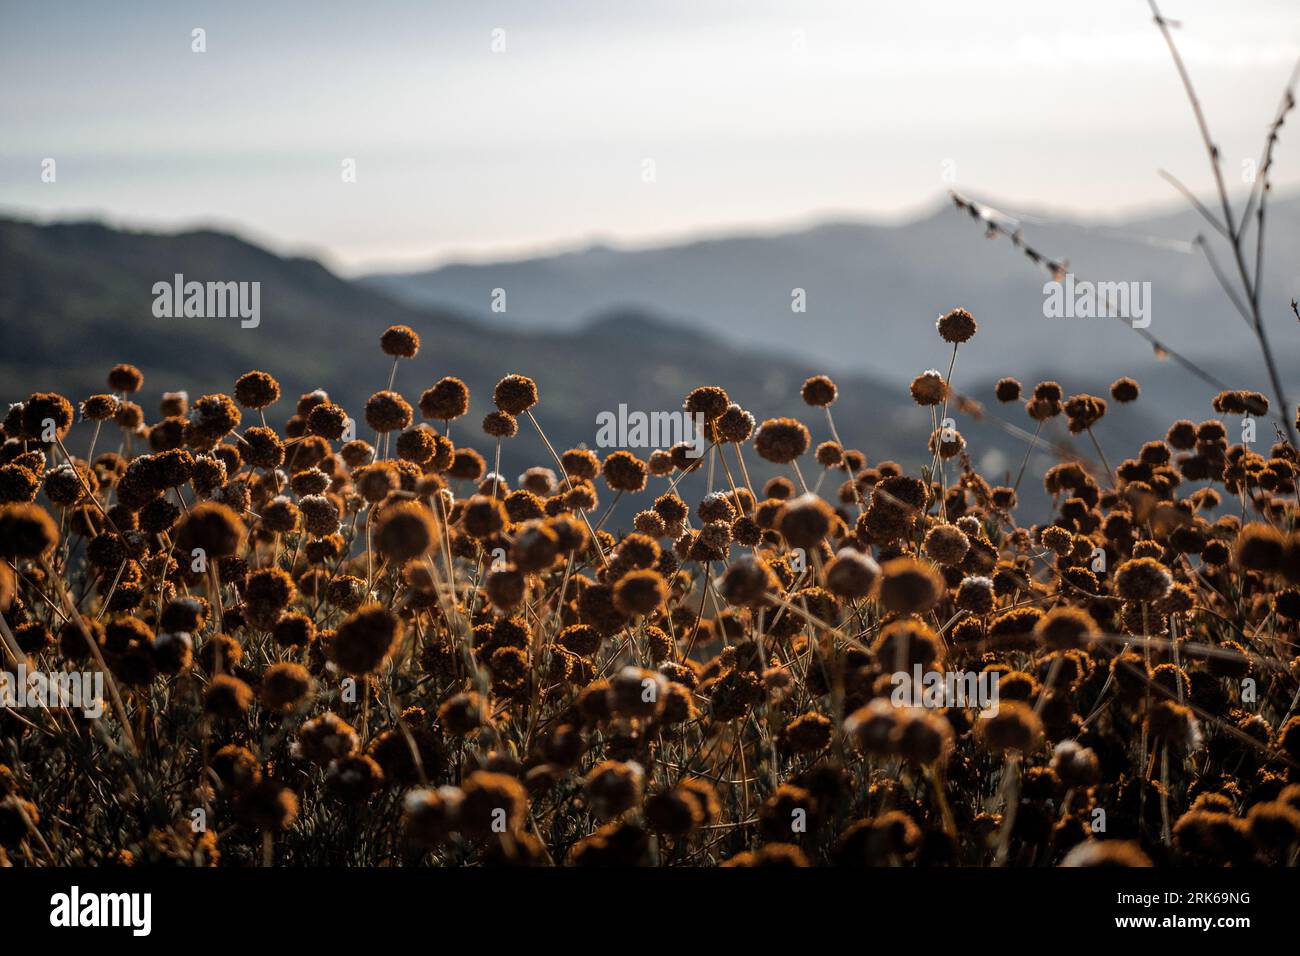 A meadow full of California buckwheat, Eriogonum fasciculatum. Stock Photo